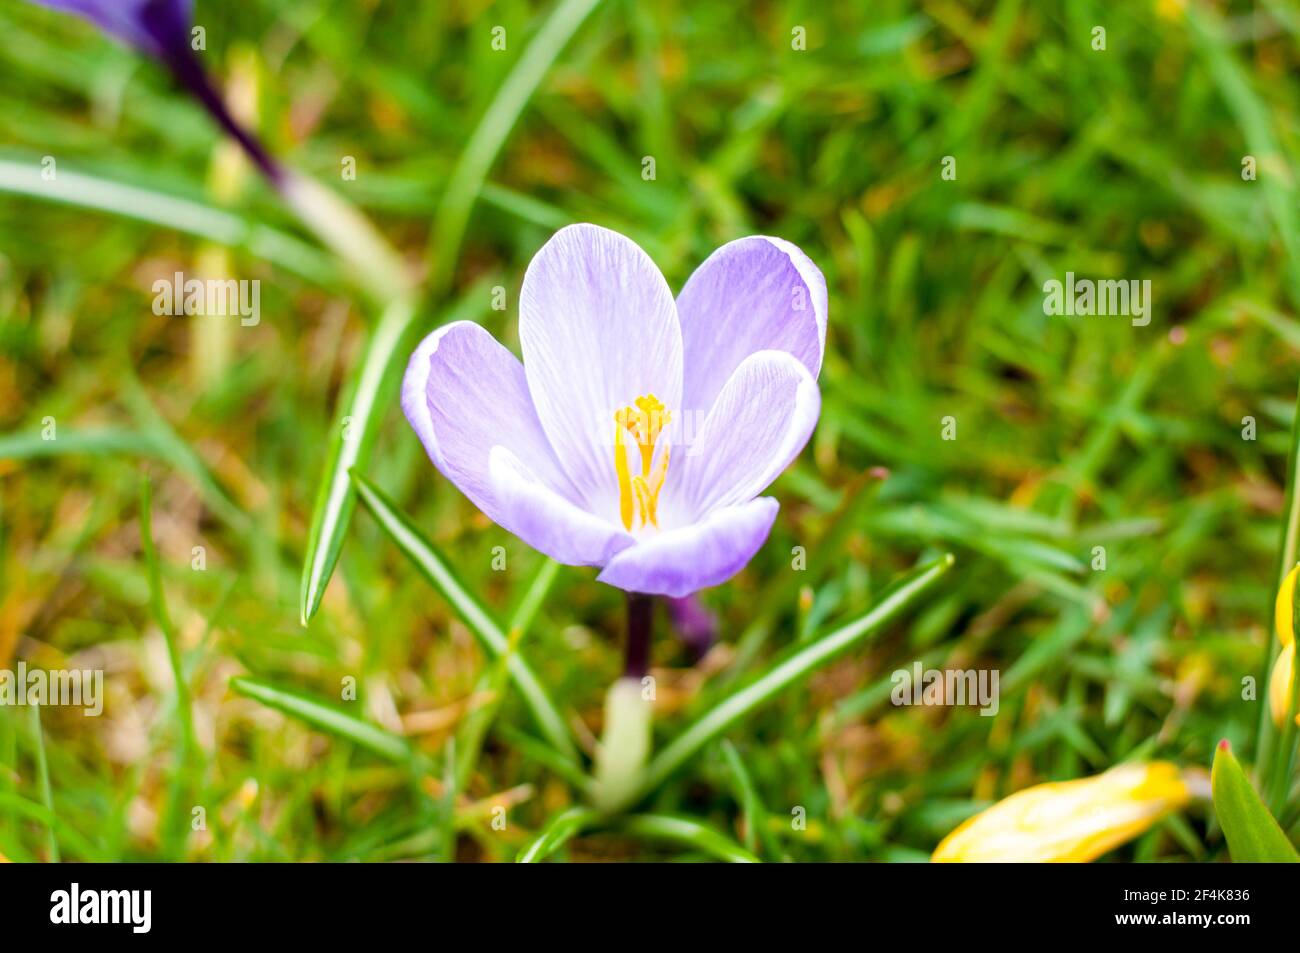 Blossoming spring flower - purple Crocus Stock Photo